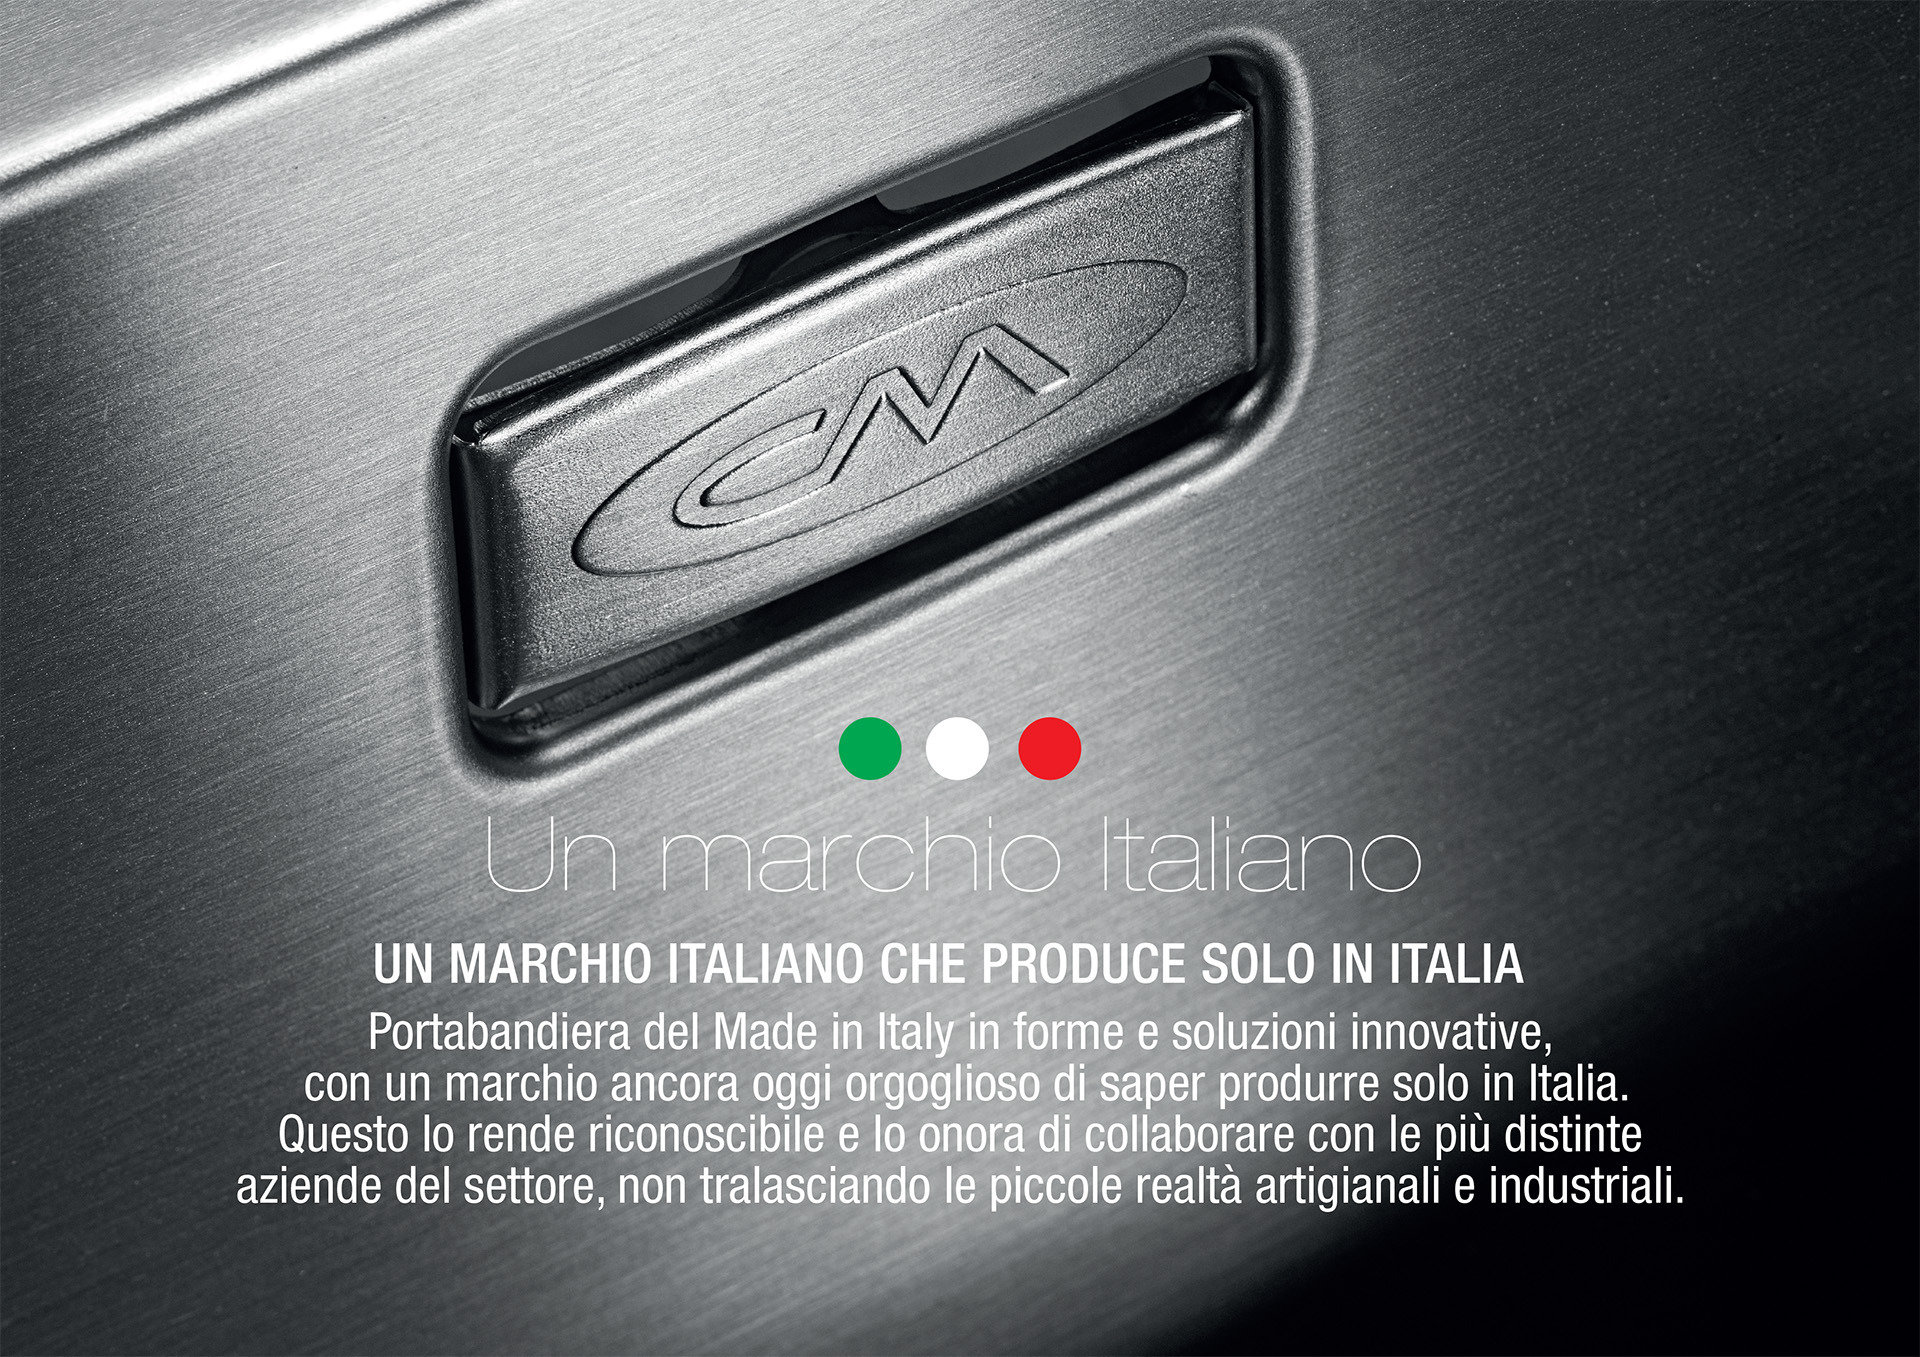 An italian brand